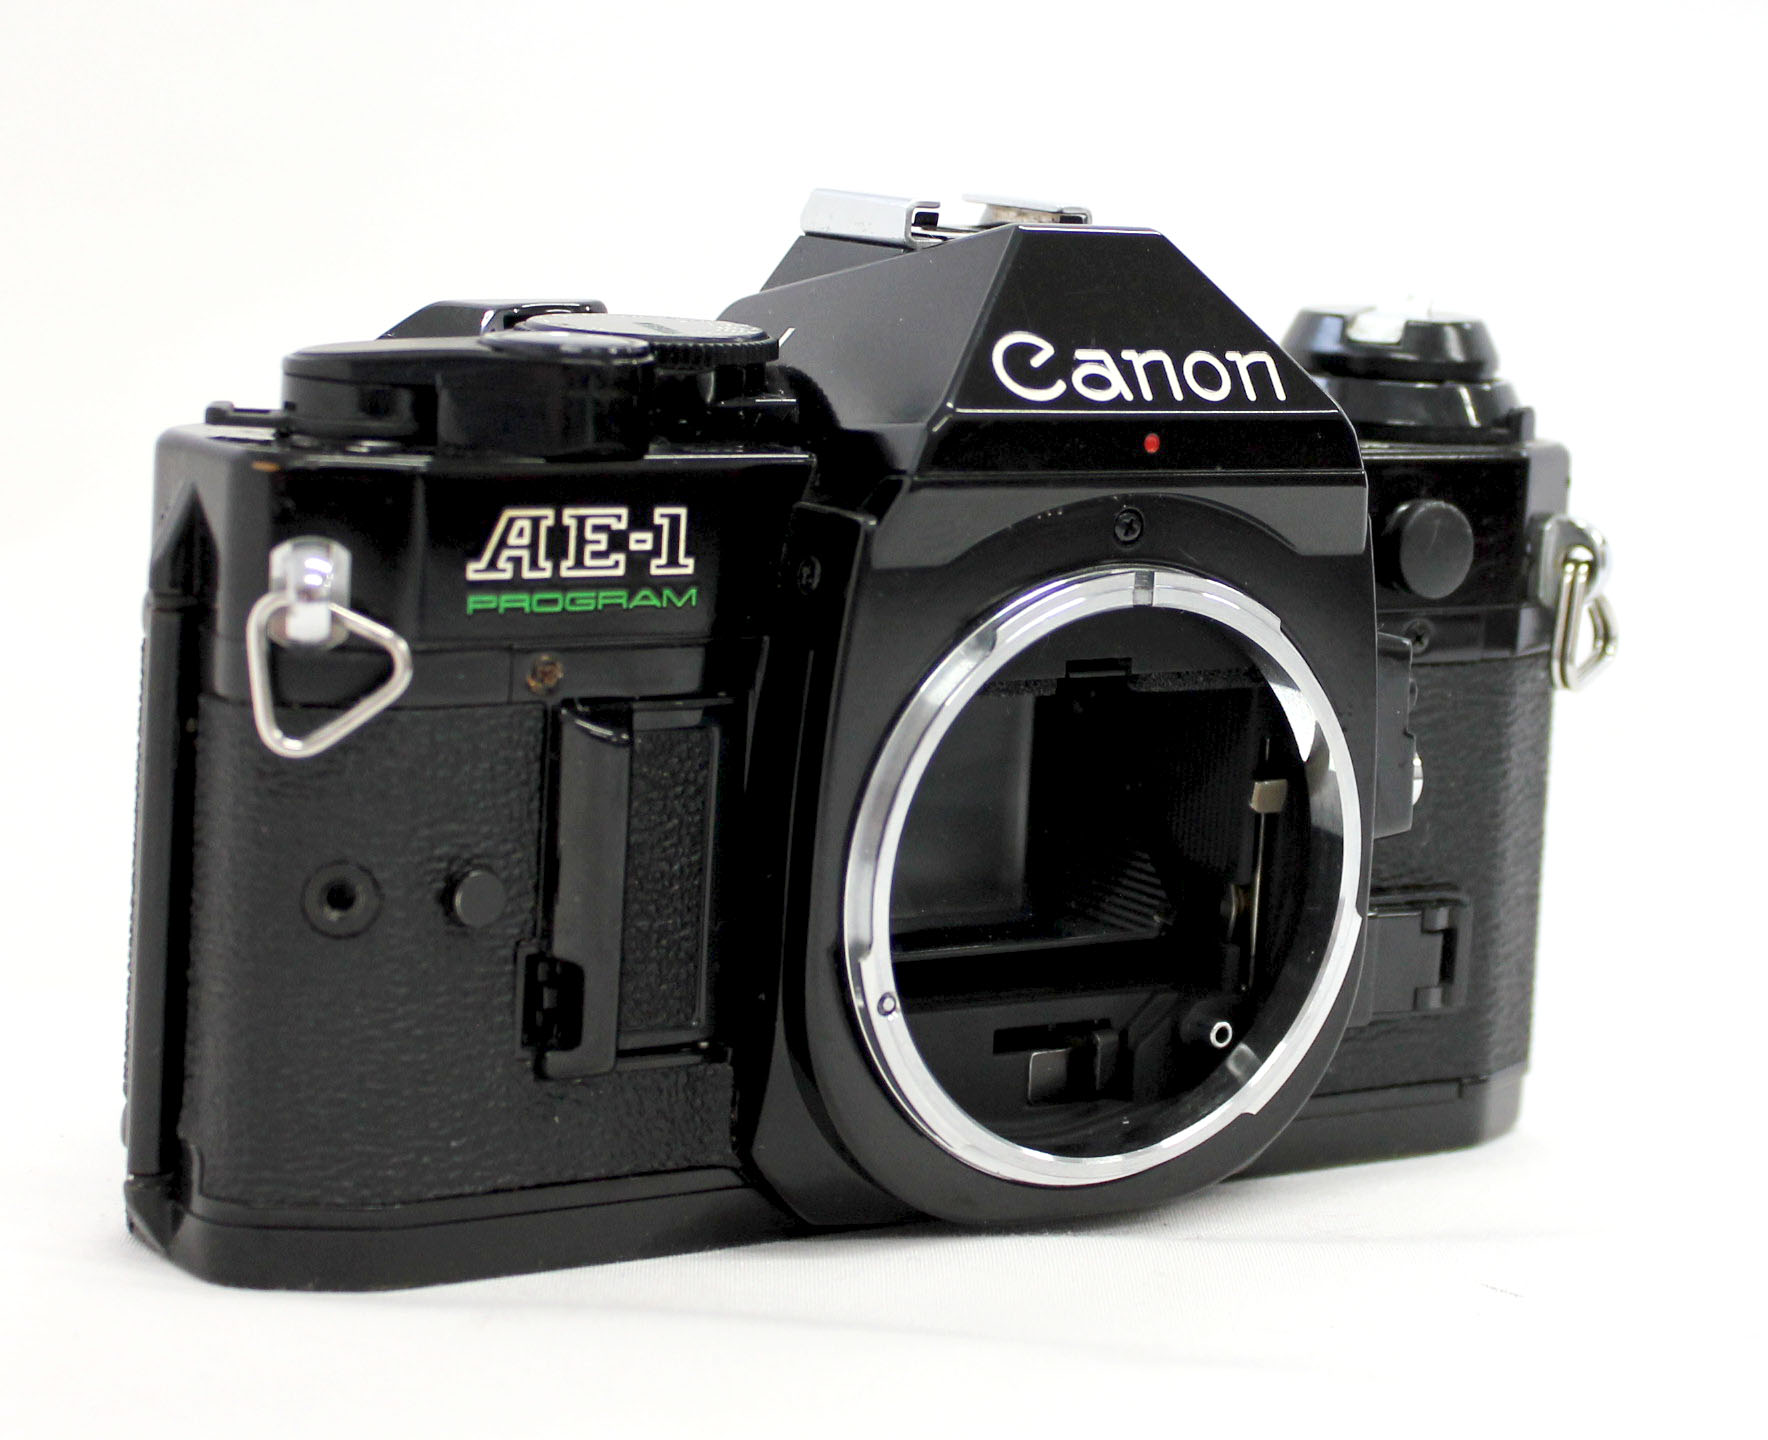 Canon AE-1 Program 35mm SLR Film Camera Black with FD 50mm F/1.4